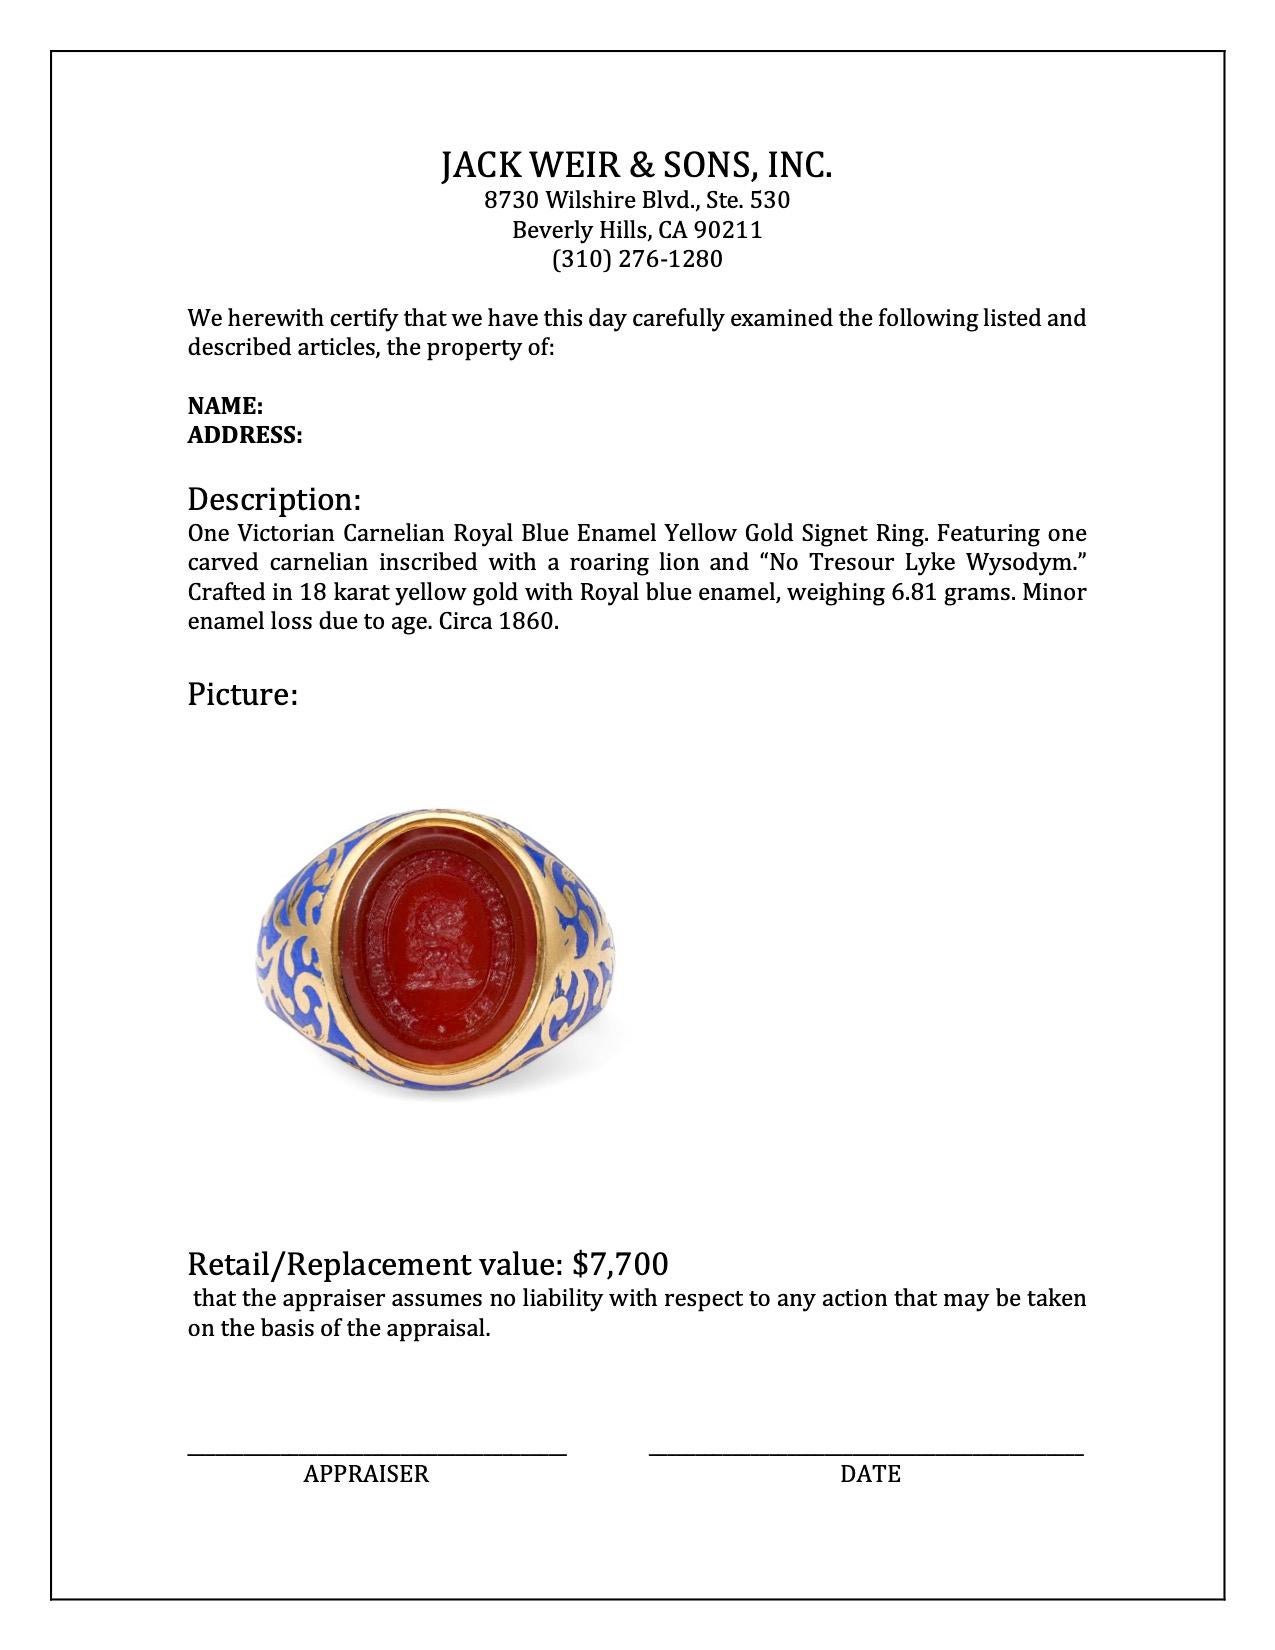 Women's or Men's Victorian Carnelian Royal Blue Enamel Yellow Gold Signet Ring